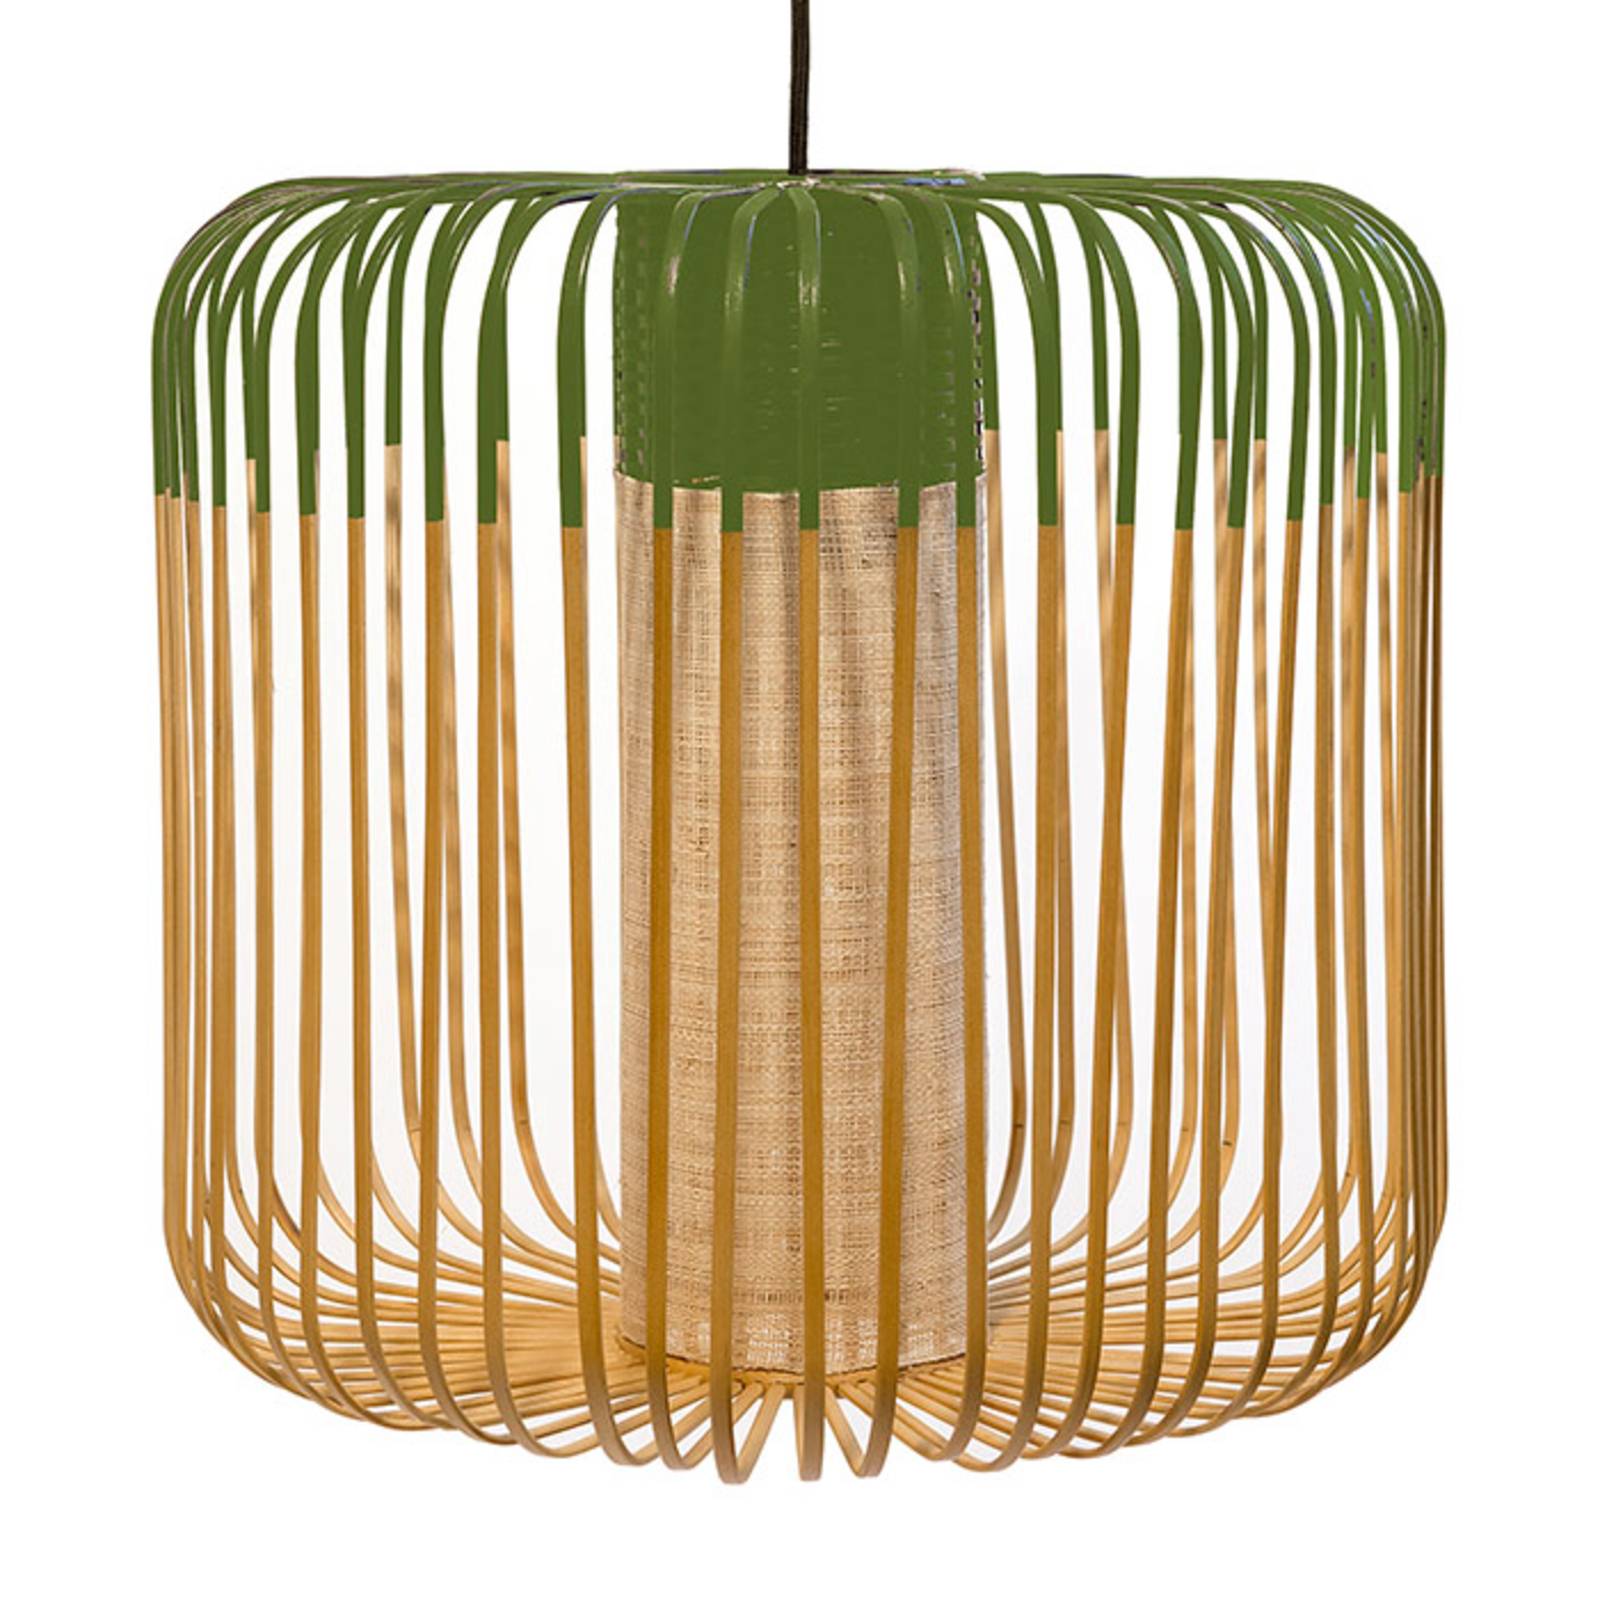 Forestier Bamboo Light M Pendellampe 45 cm grün